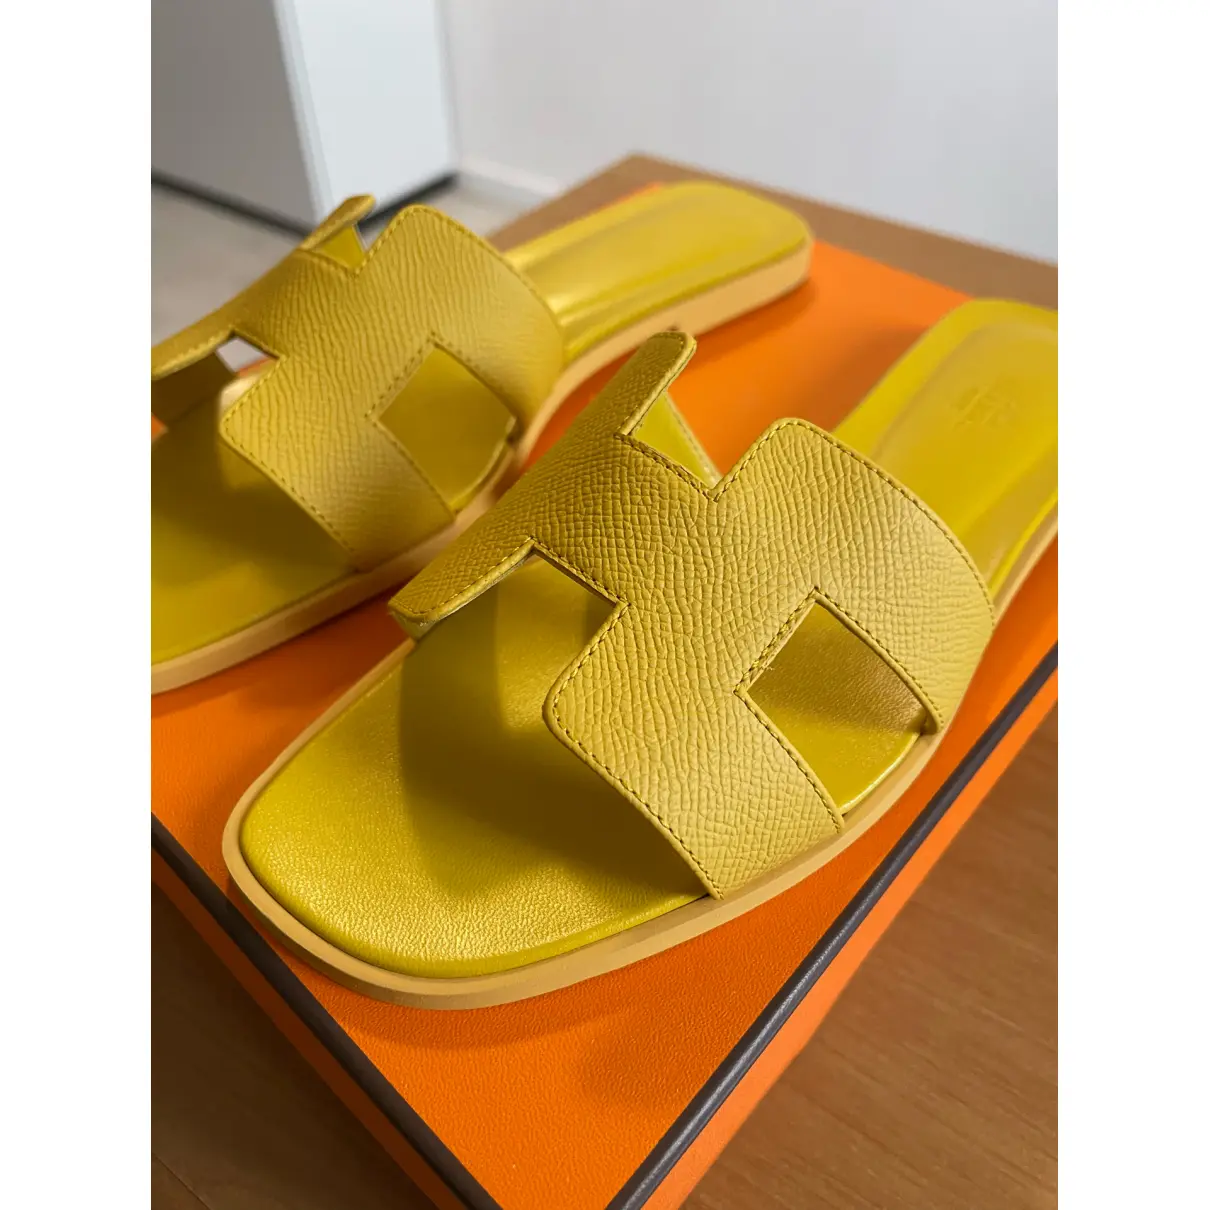 Buy Hermès Oran leather sandal online